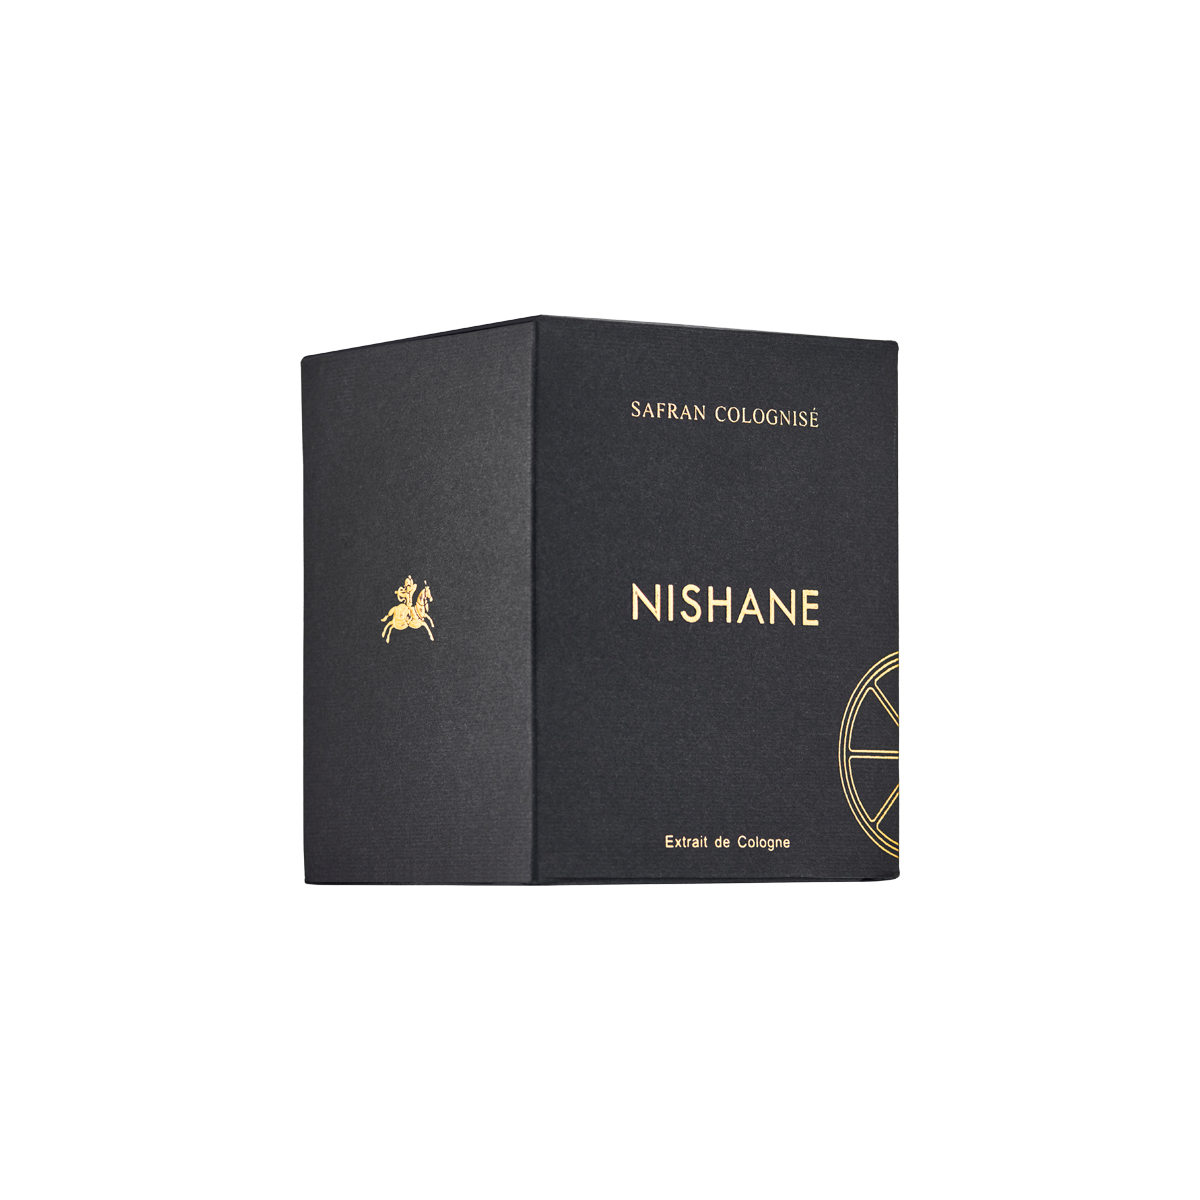 Nishane - Safran Colognise Eau de Cologne